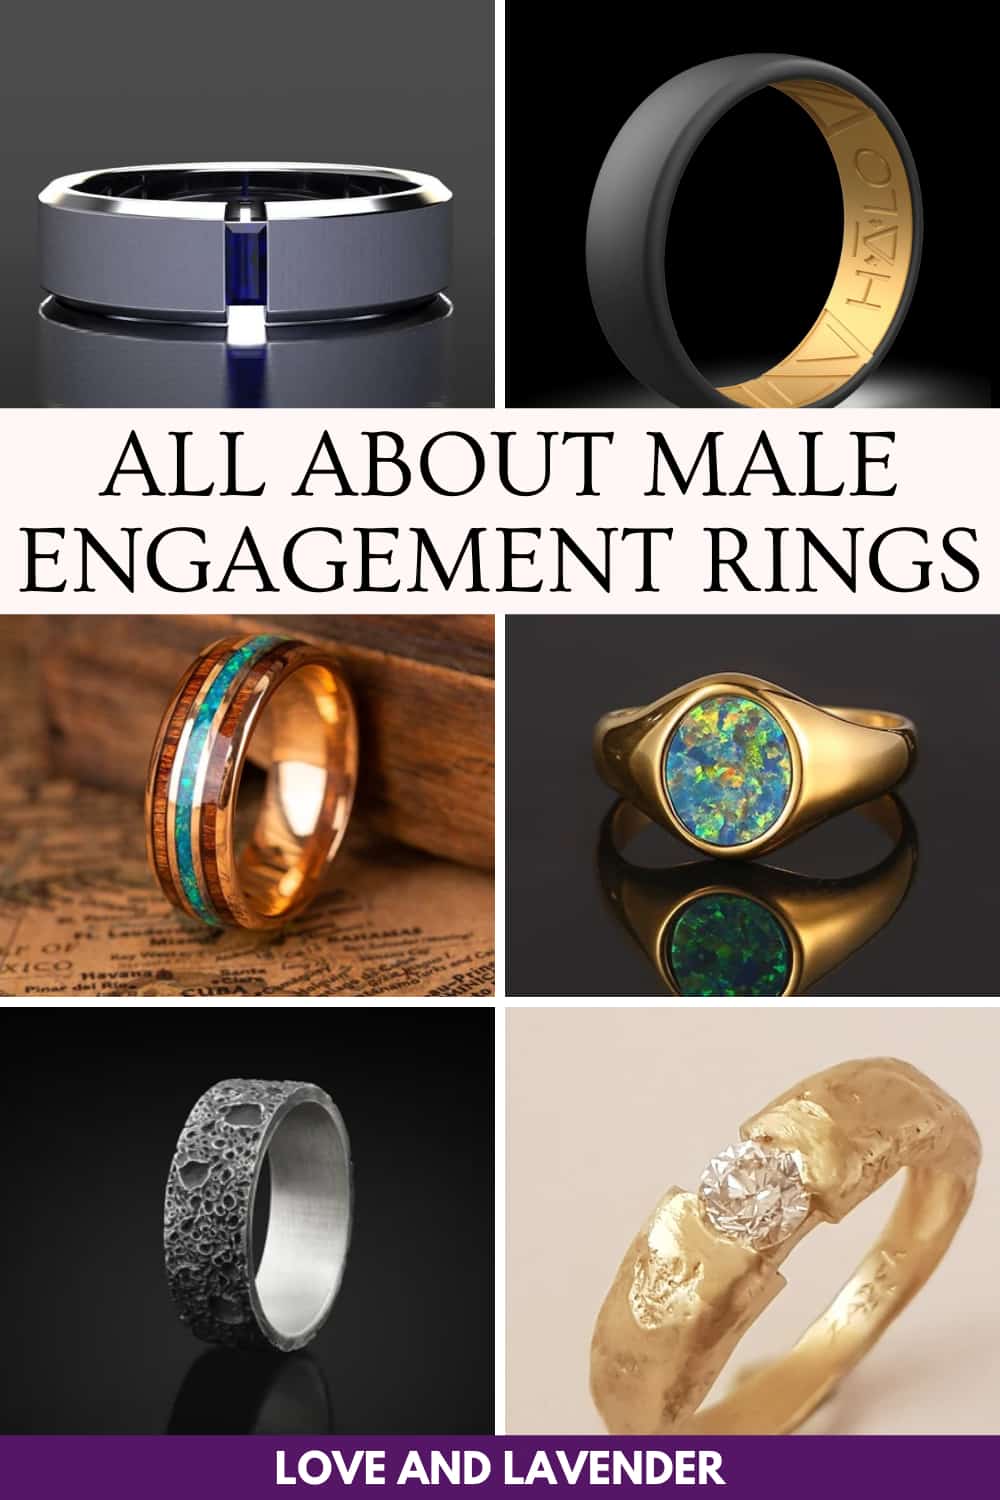 15 Modern Male Engagement Rings - Pinterest pin